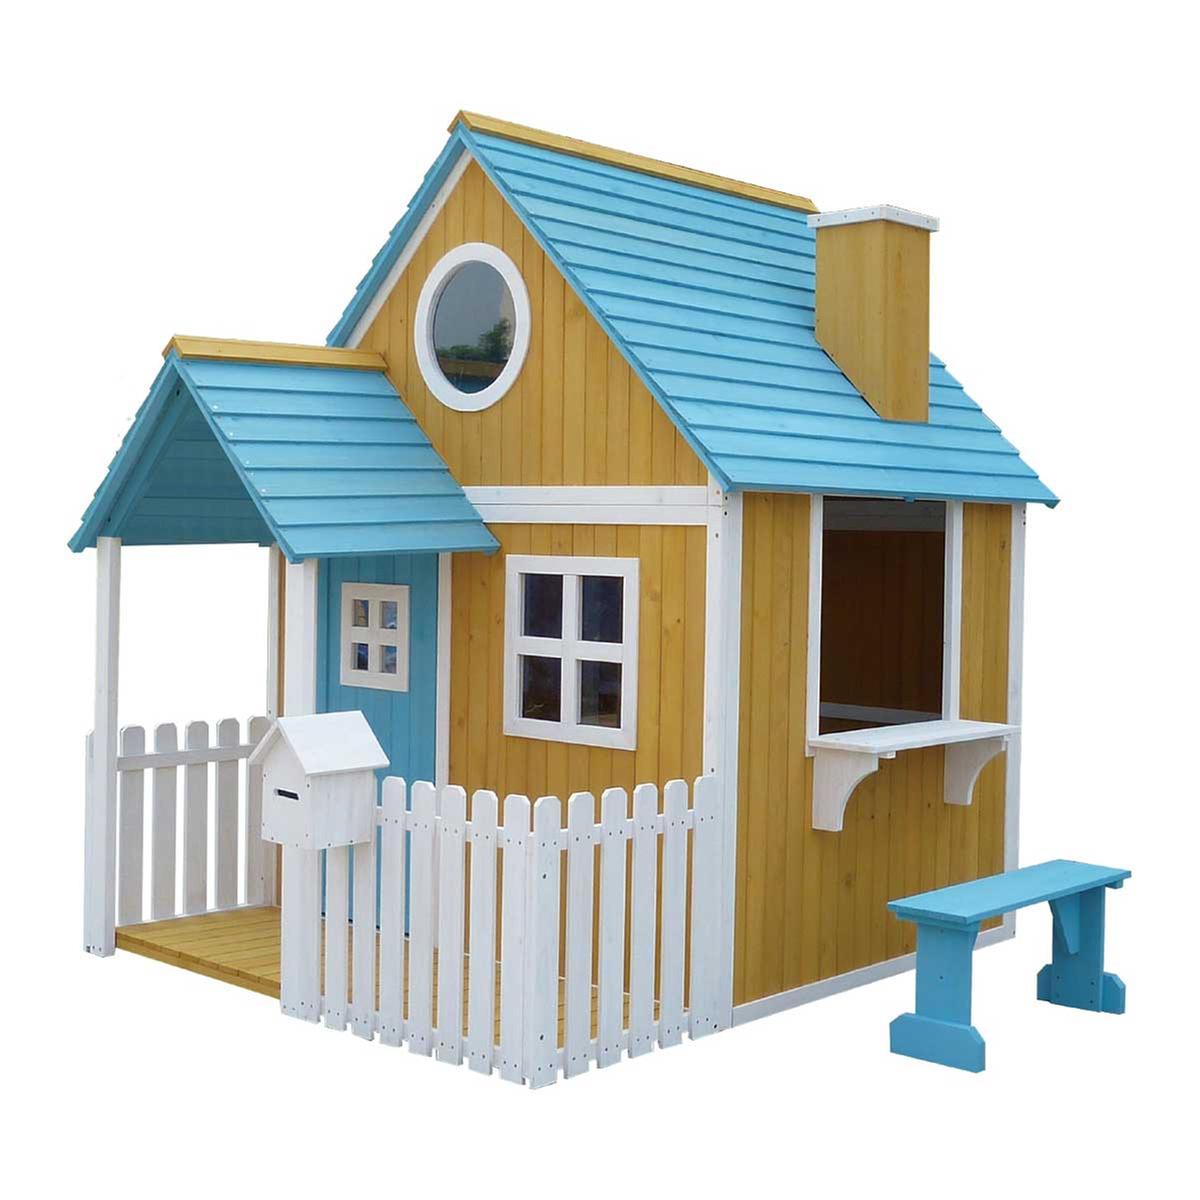 Casa de brincar de madeira Olden | Tudo o que quiseres para brincar na rua  | Loja de brinquedos e videojogos Online Toysrus